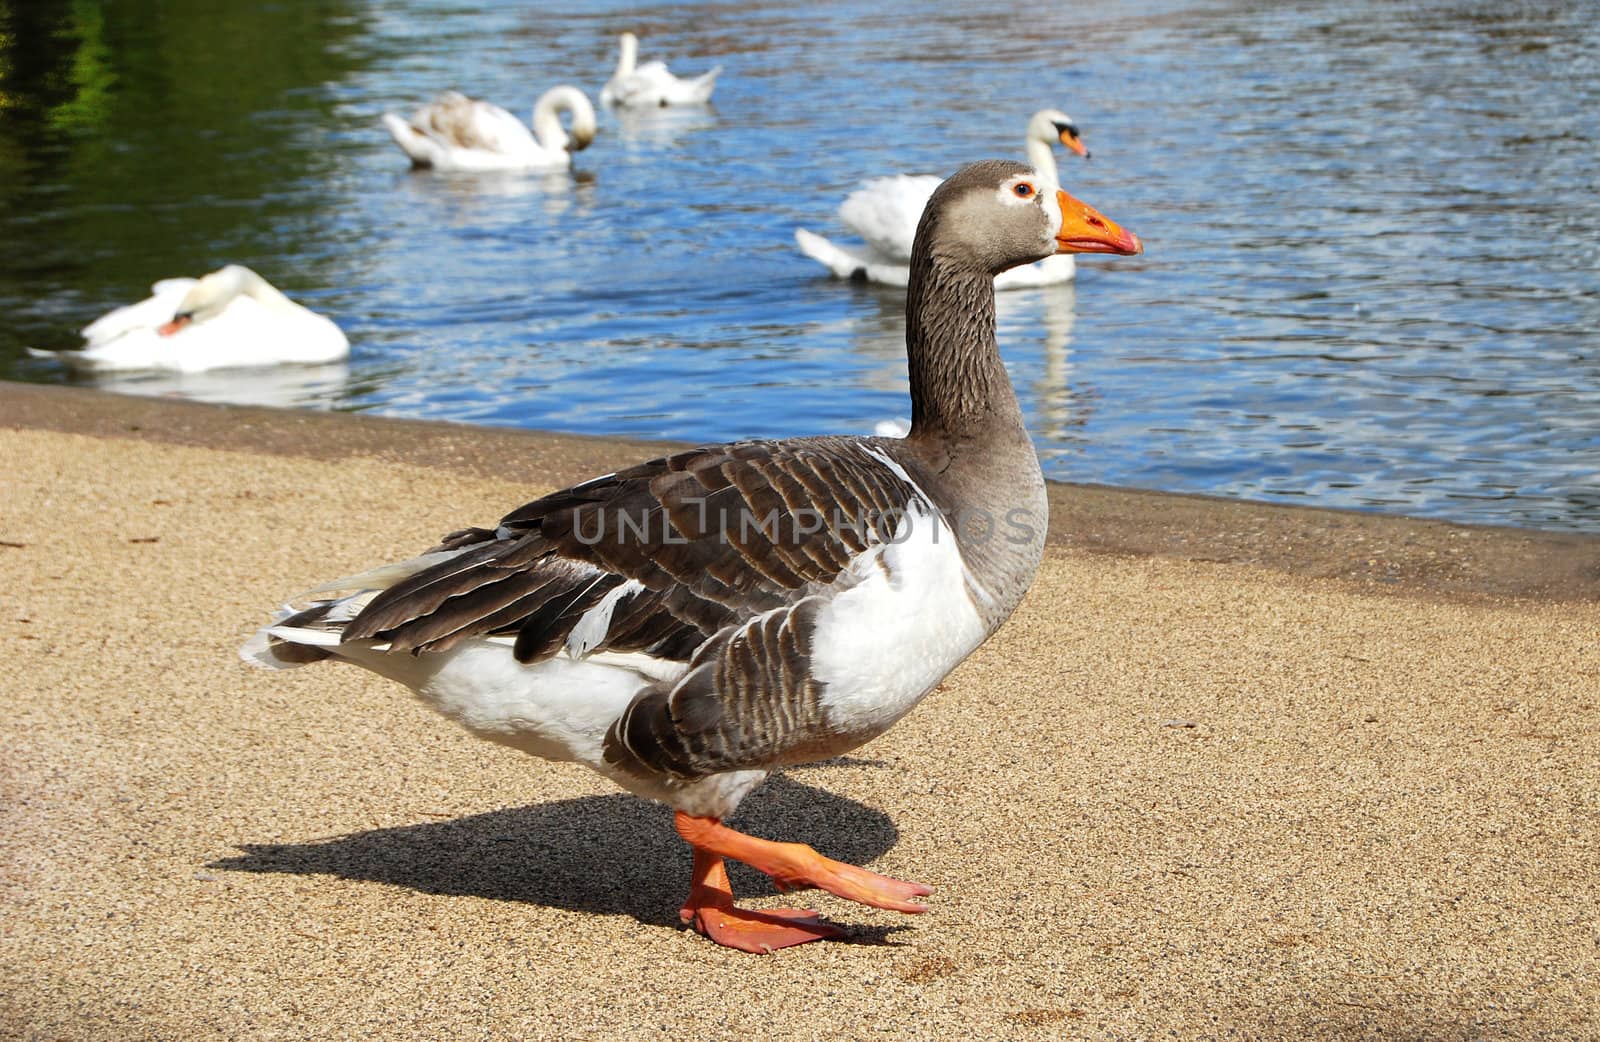 Duck closeup on lake bank, water, swans